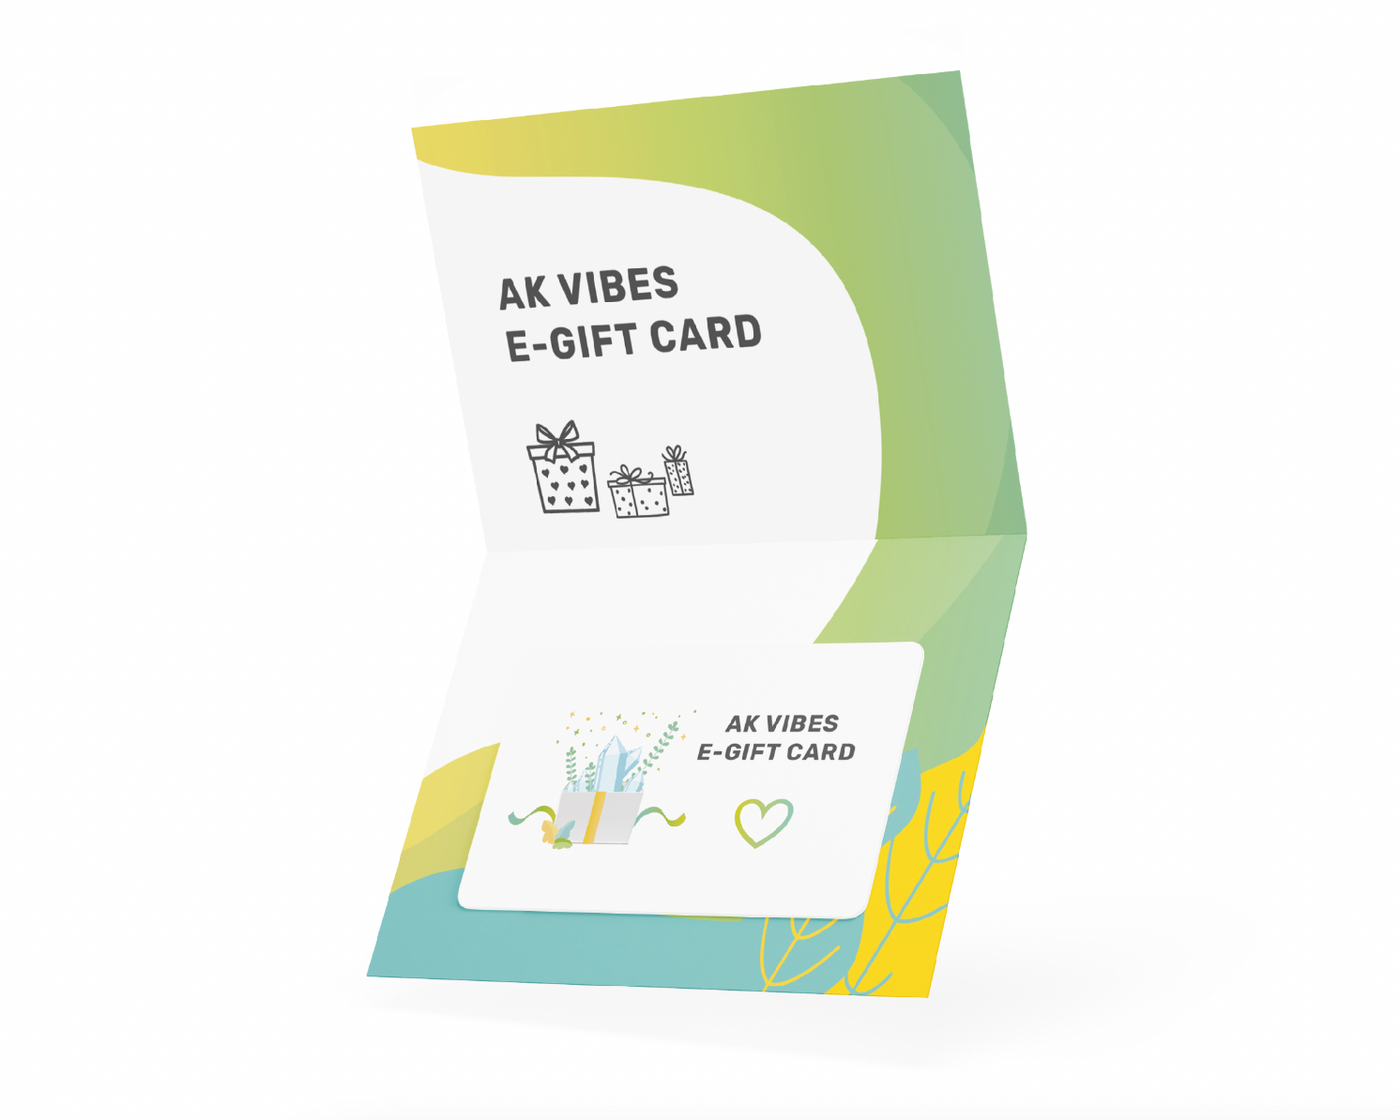 AK VIBES E-GIFT CARD